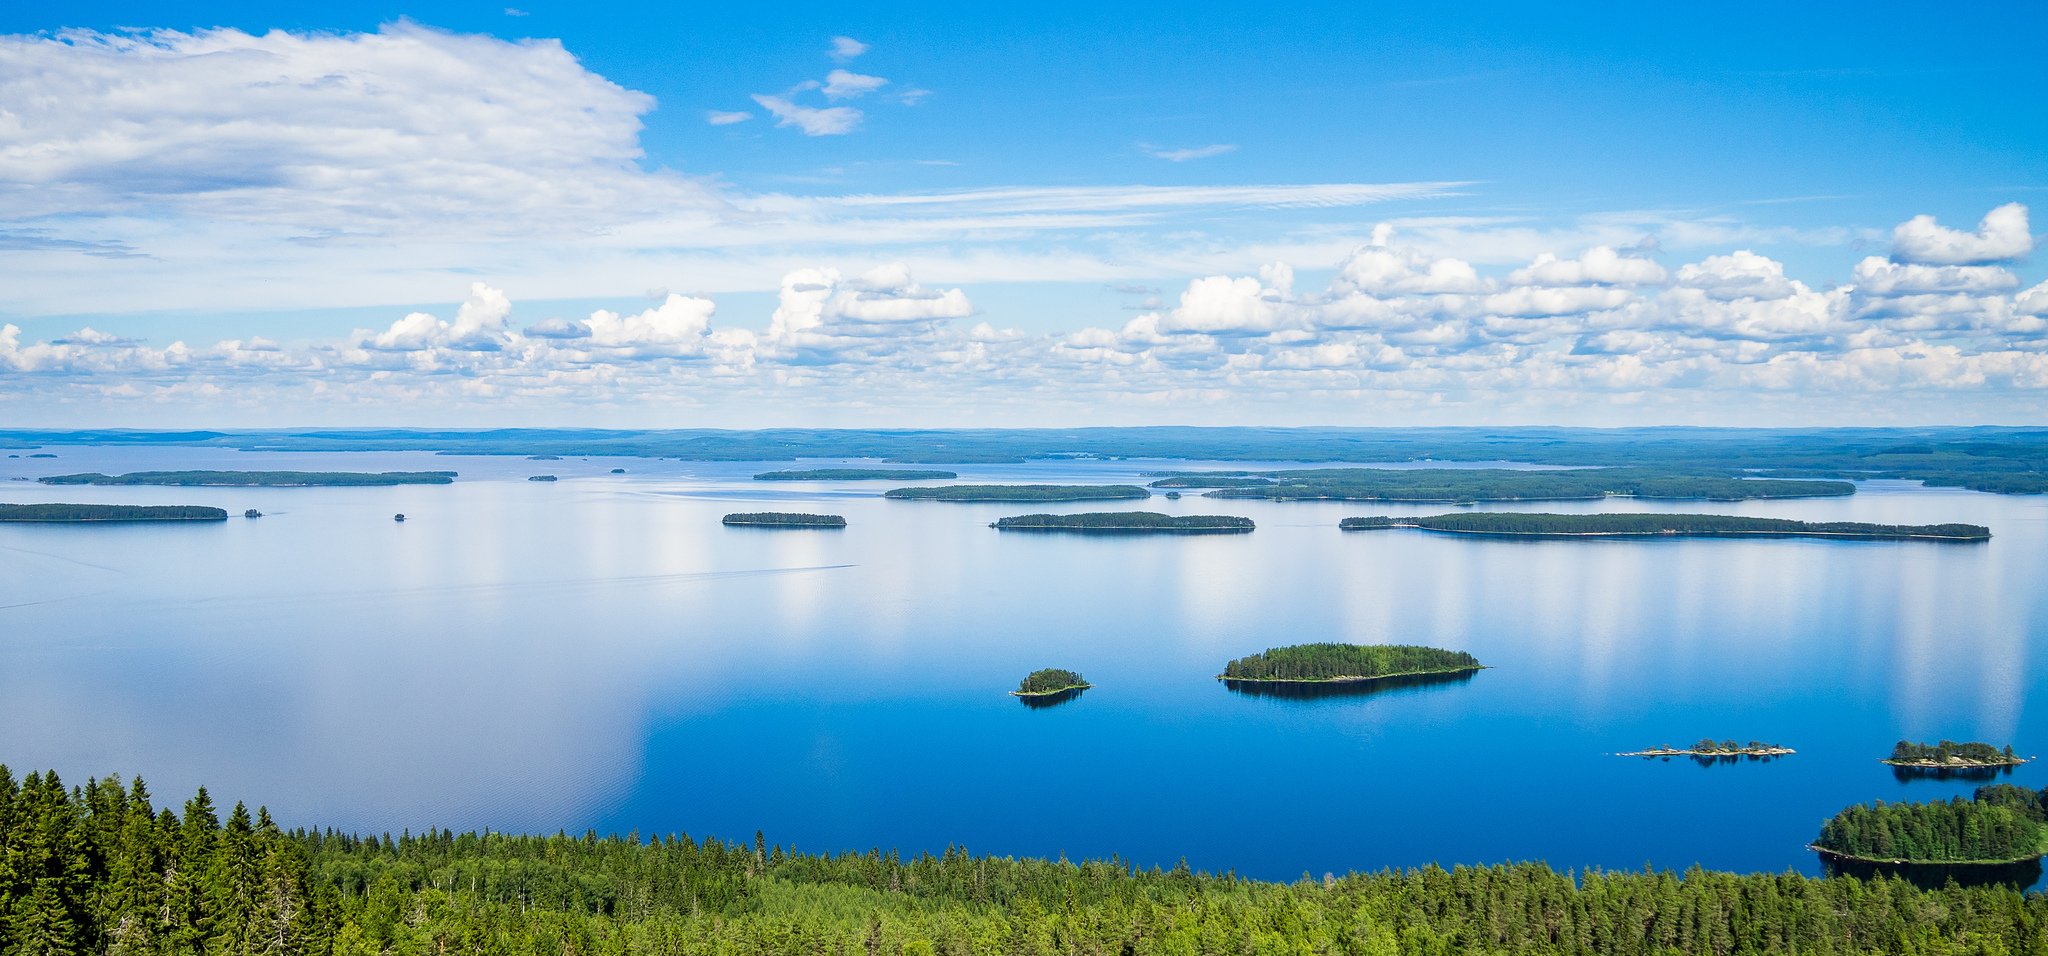 Тысяча озер где. Озеро Пиелинен Финляндия. Озеро Сайма Финляндия. Озеро Суоми Финляндия. Озеро Штерн Финляндия.